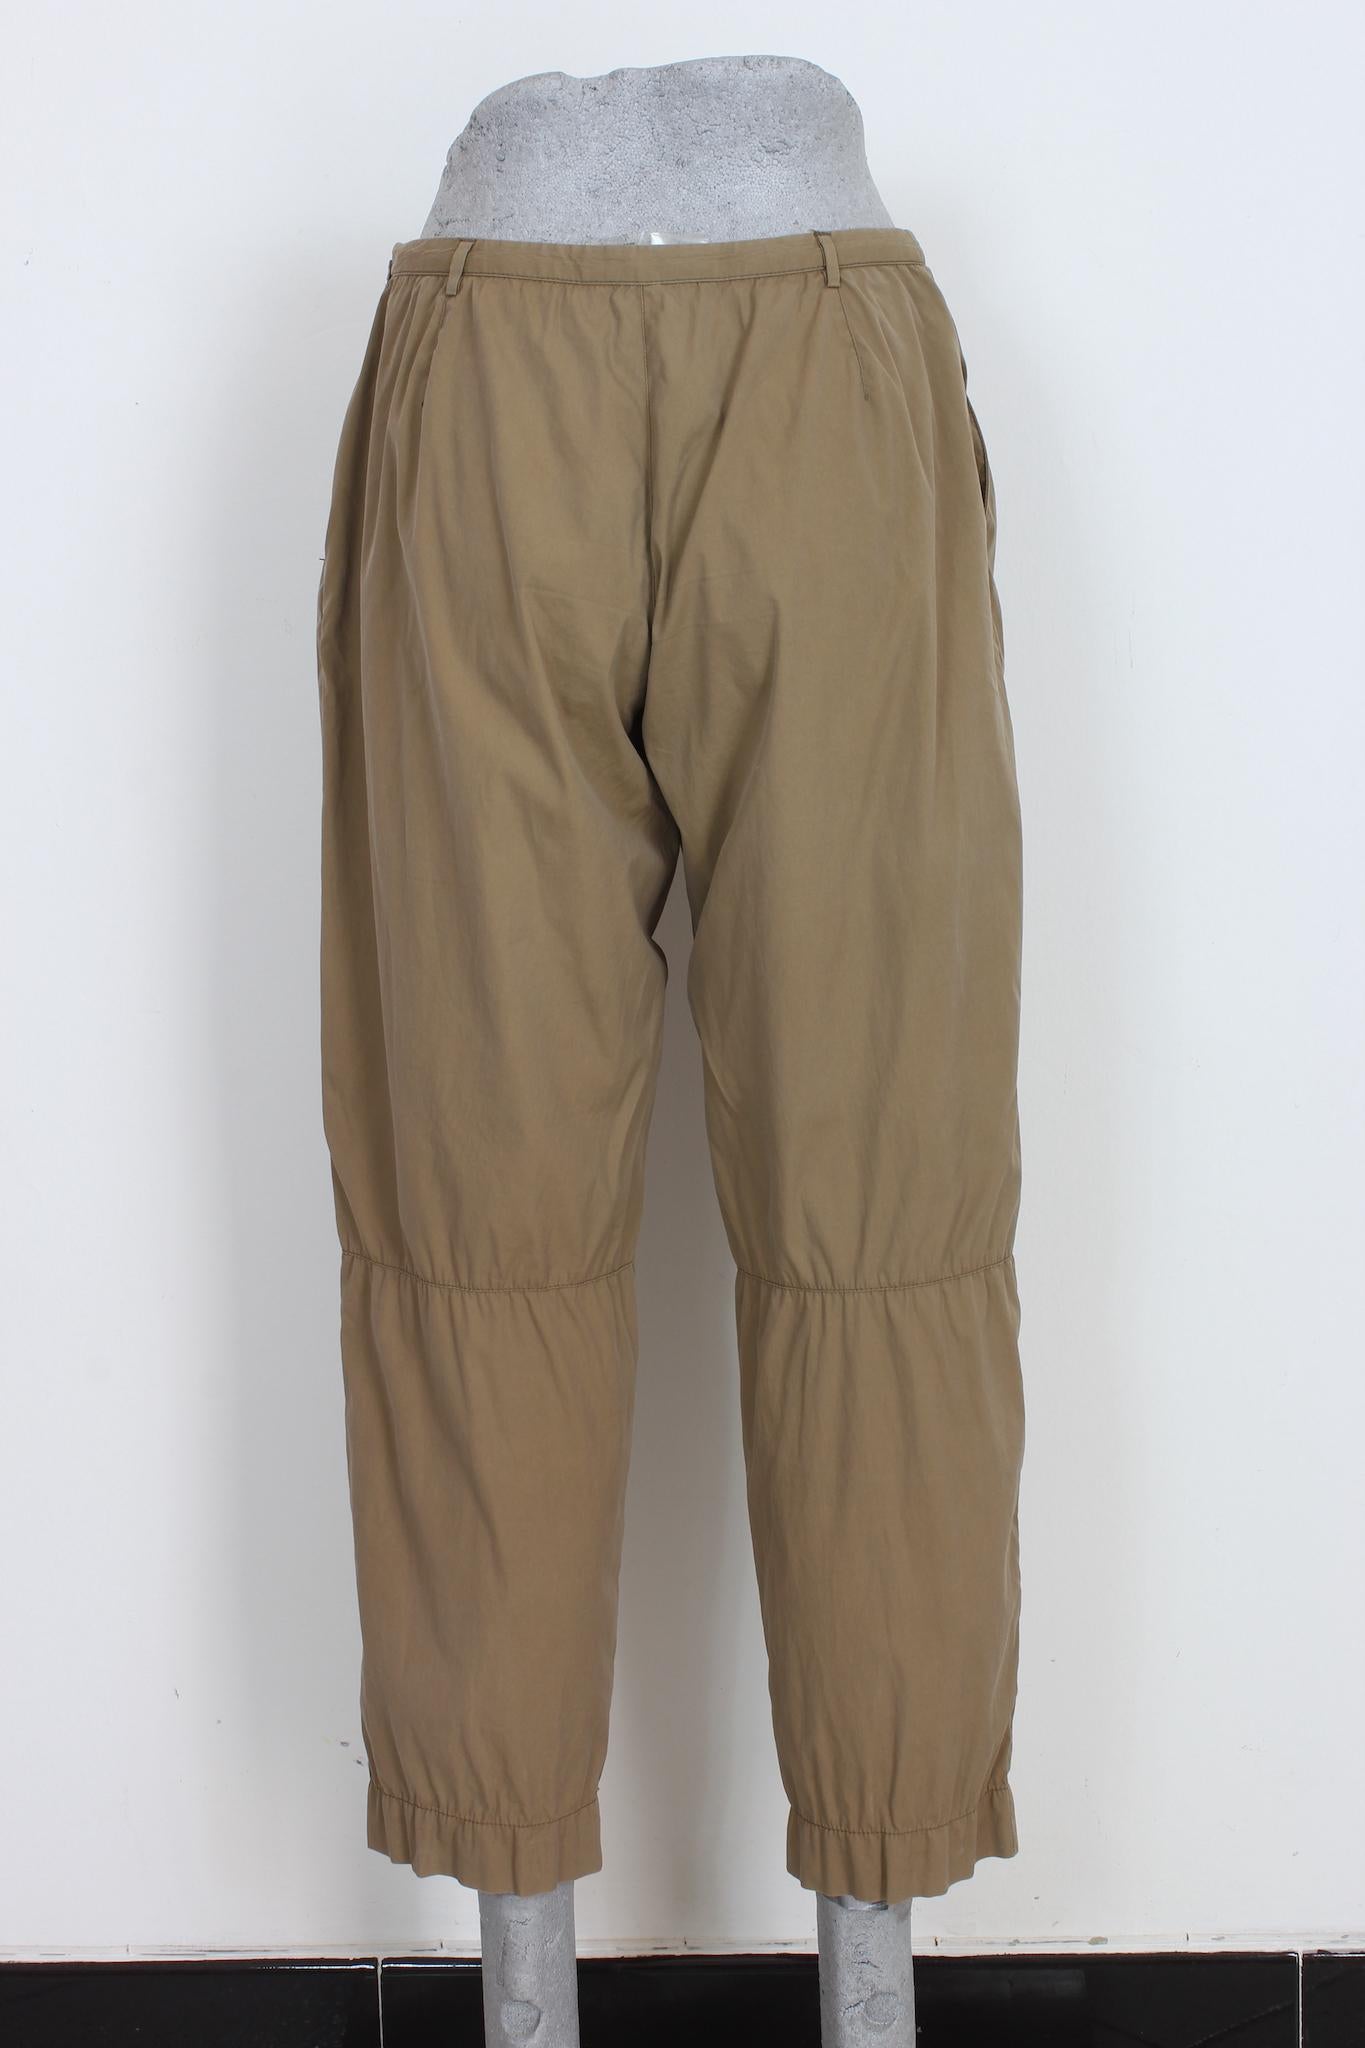 Prada vintage 90s Capri pants. Light brown color, in cotton, ankle length. Two side pockets, side zip fastening. Made in Italy.

Size: 40 It 6 Us 8 Uk

Waist: 35 cm
Length: 91 cm
Hem: 17 cm
Pant crotch: 70 cm